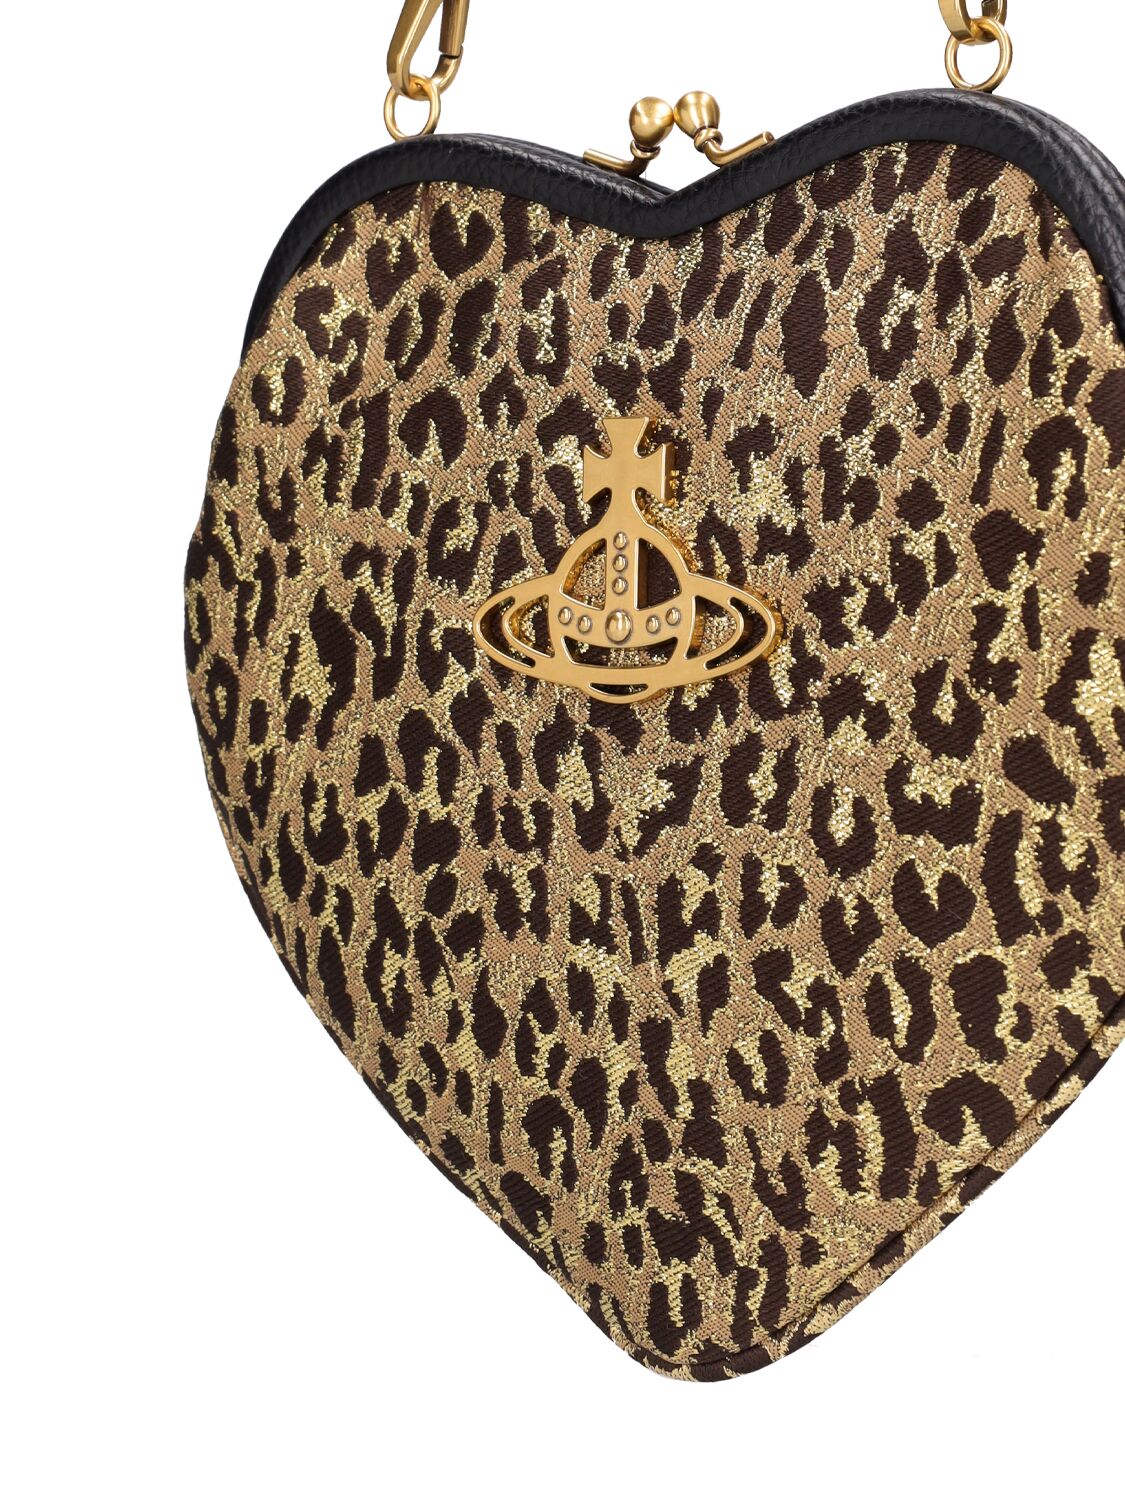 Vivienne Westwood Belle heart-shaped Metallic Tote Bag - Farfetch